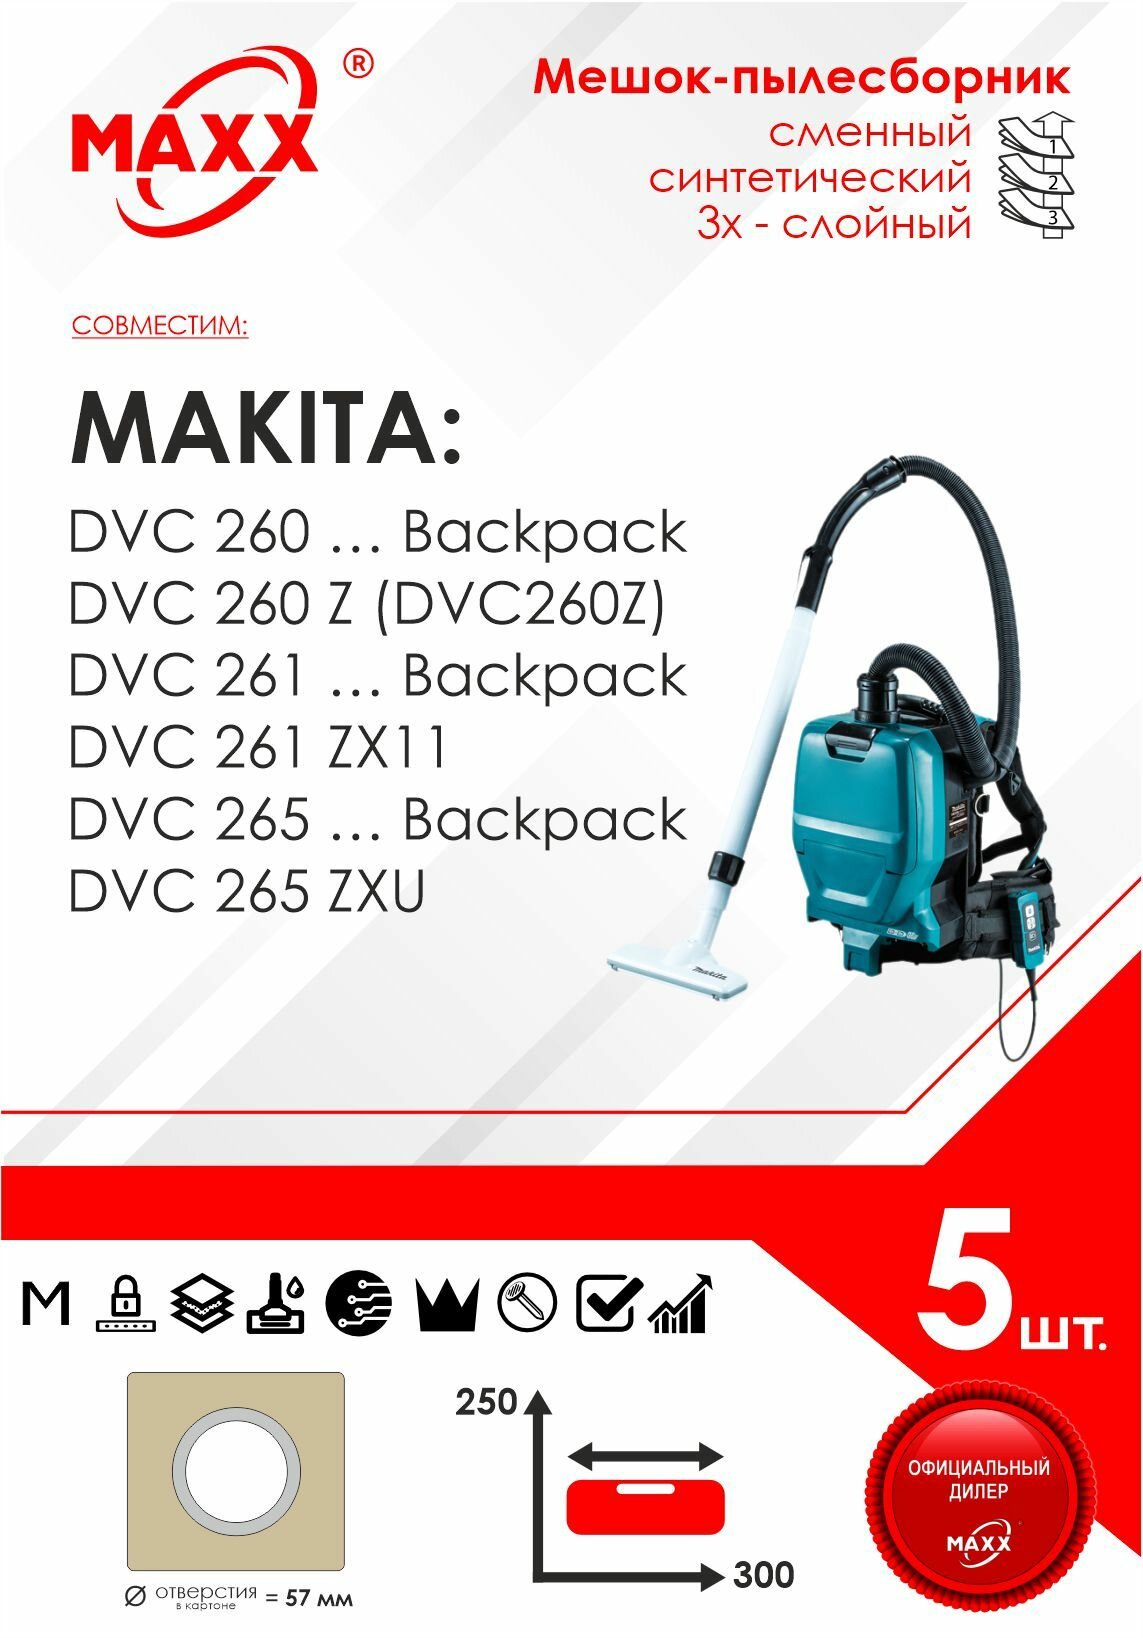 Мешок - пылесборник 5 шт. для пылесоса MAKITA DVC 260, 261, 265 Backpack 197903-8